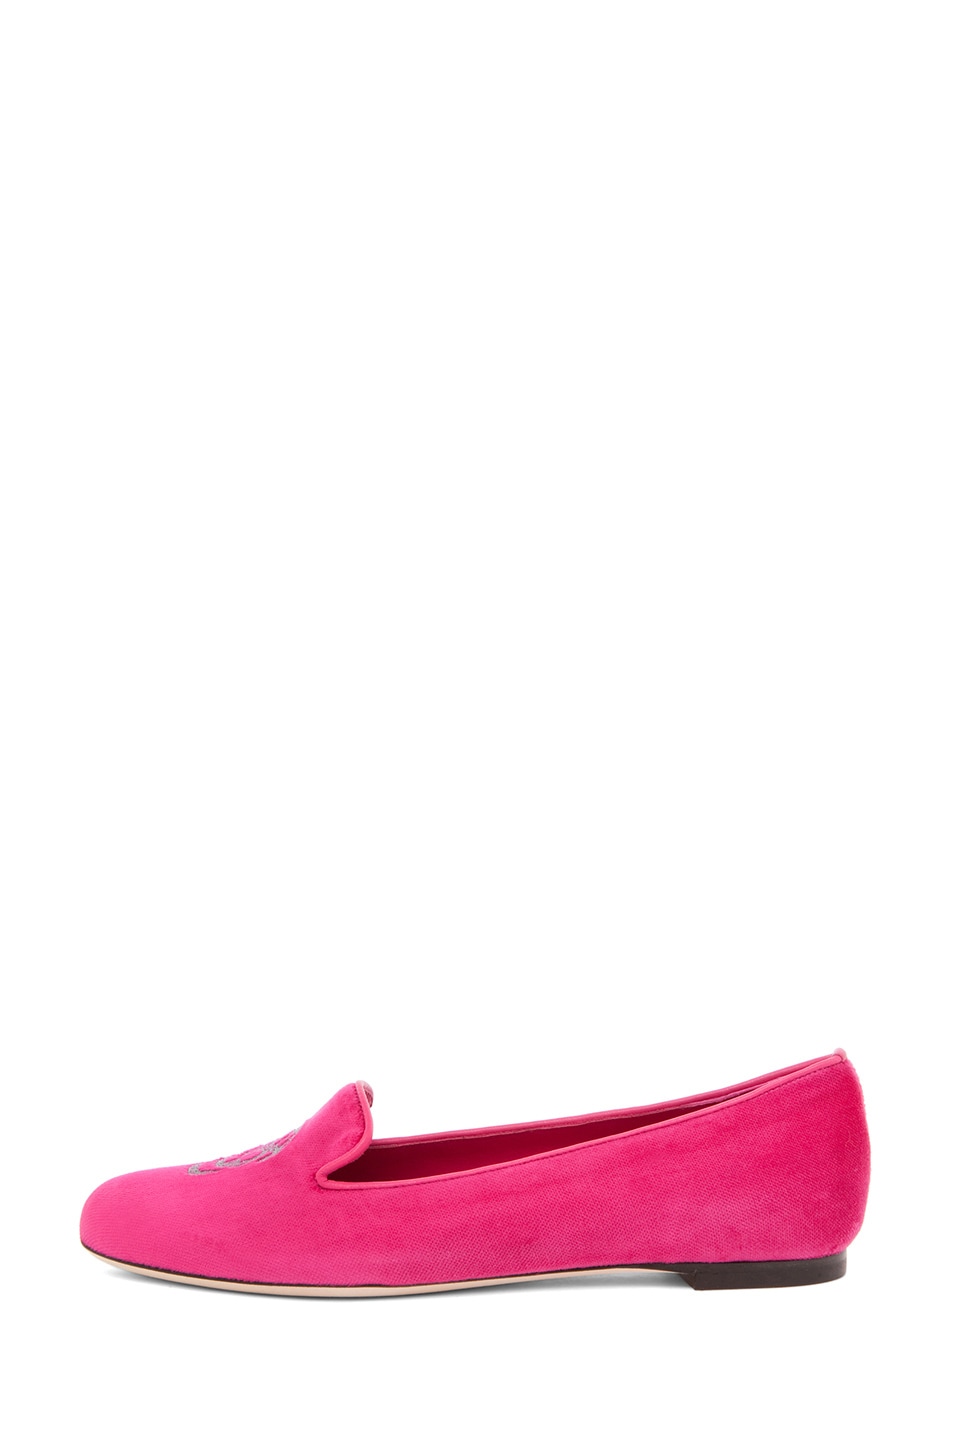 Alexander McQueen Velvet Slipper in Pink | FWRD